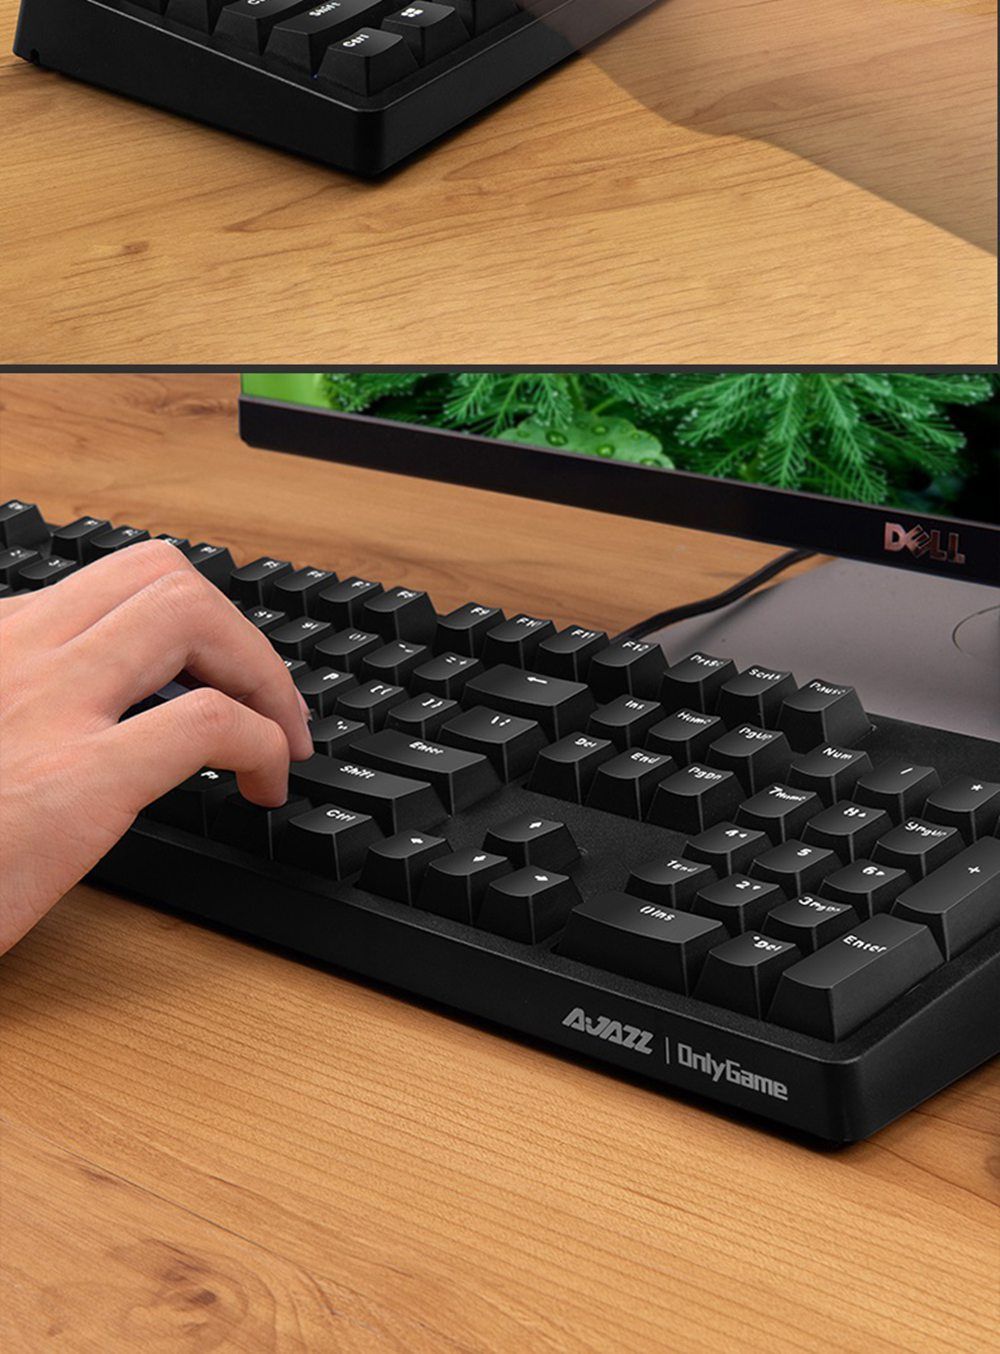 Ajazz-AK535-104Keys-USB-Wired-Cherry-MX-Switch-PBT-Keycaps-Mechanical-Gaming-Keyboard-for-Laptop-PC-1659891